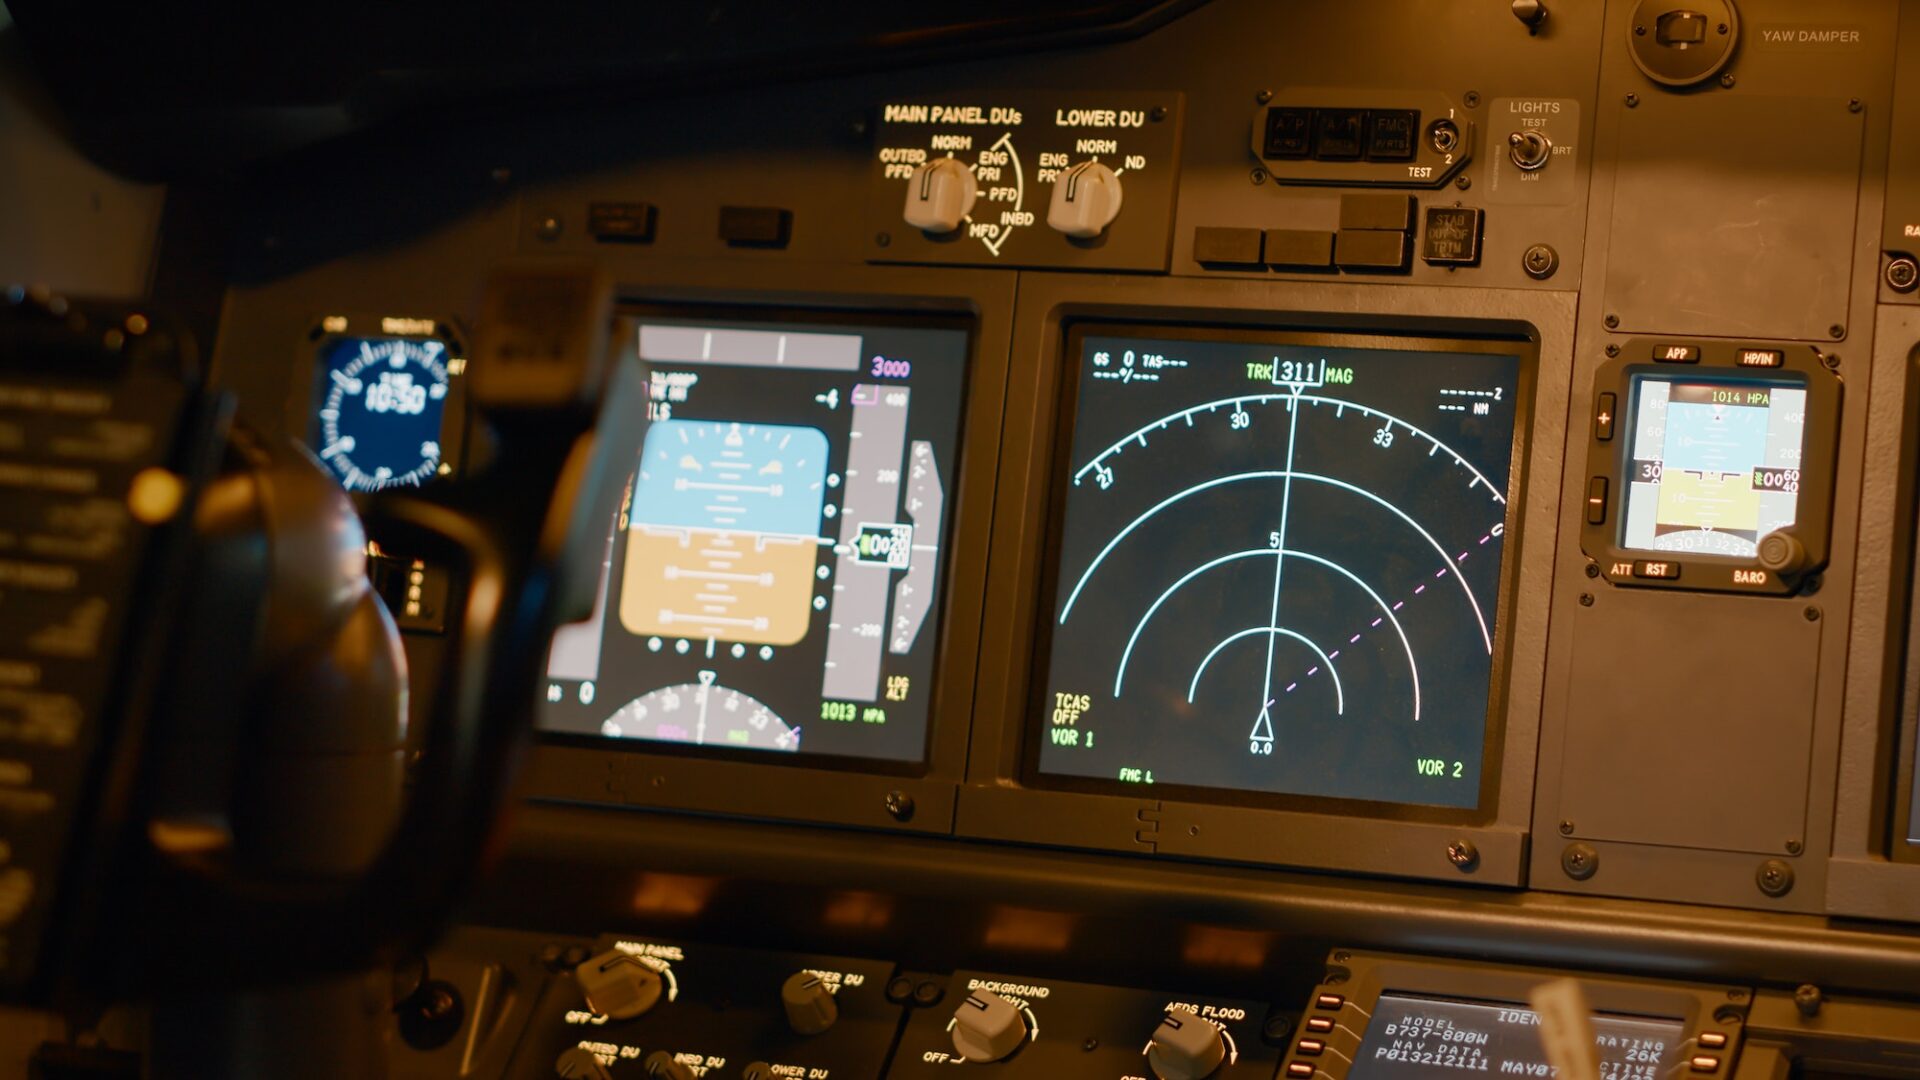 Radar compass and windscreen on dashboard in cockpit